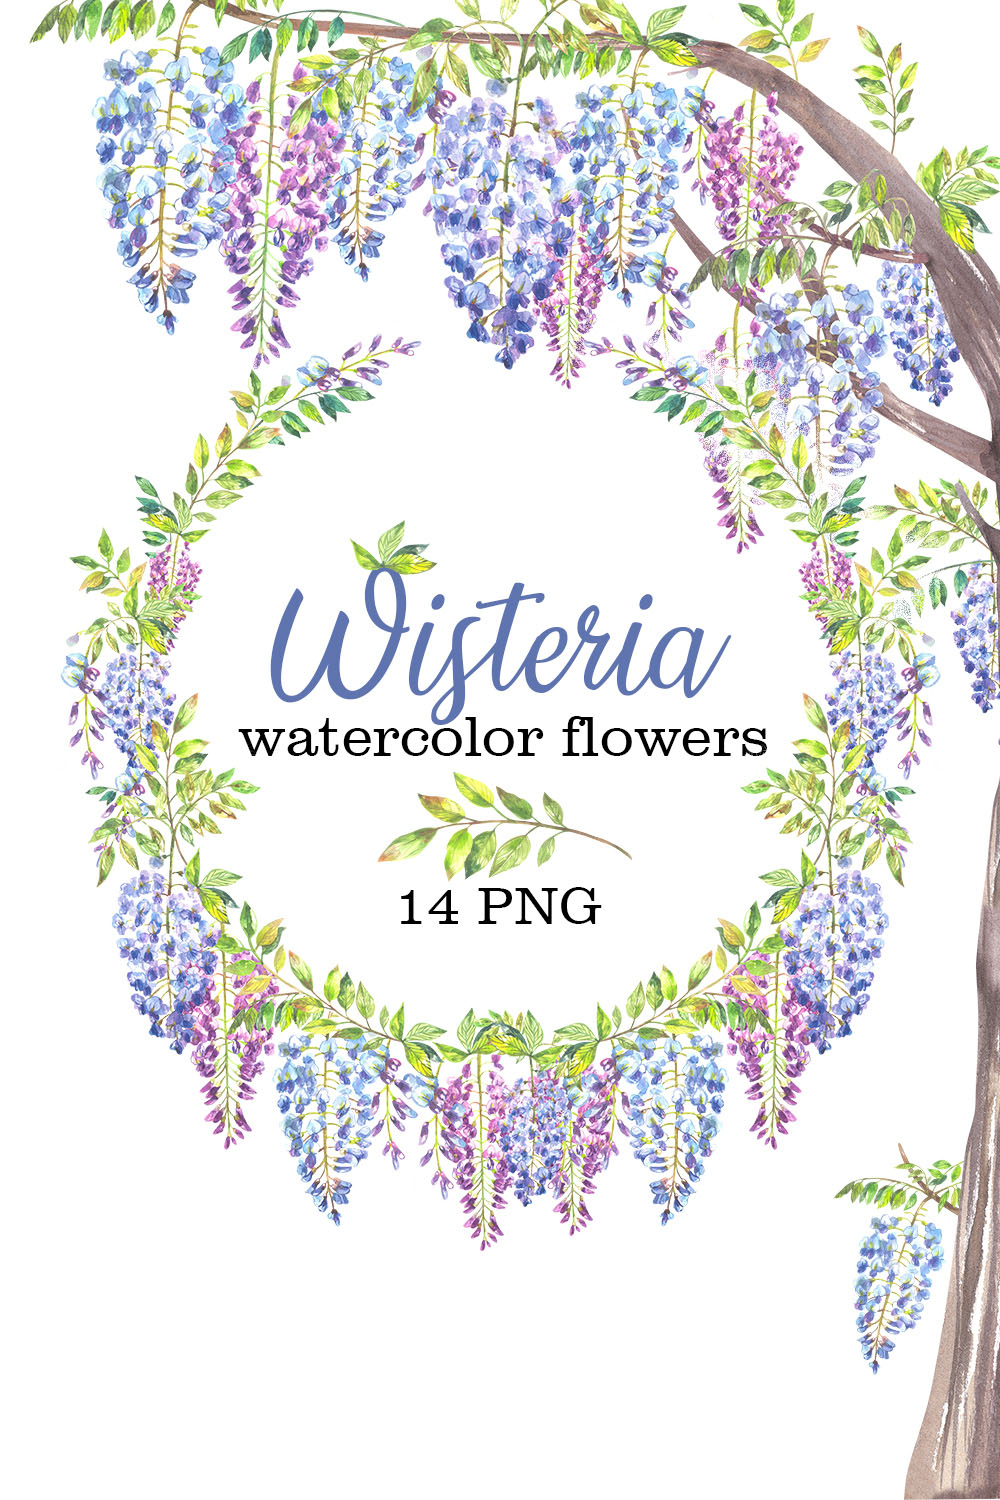 Wisteria Watercolor Flowers Illustration Pinterest Image.